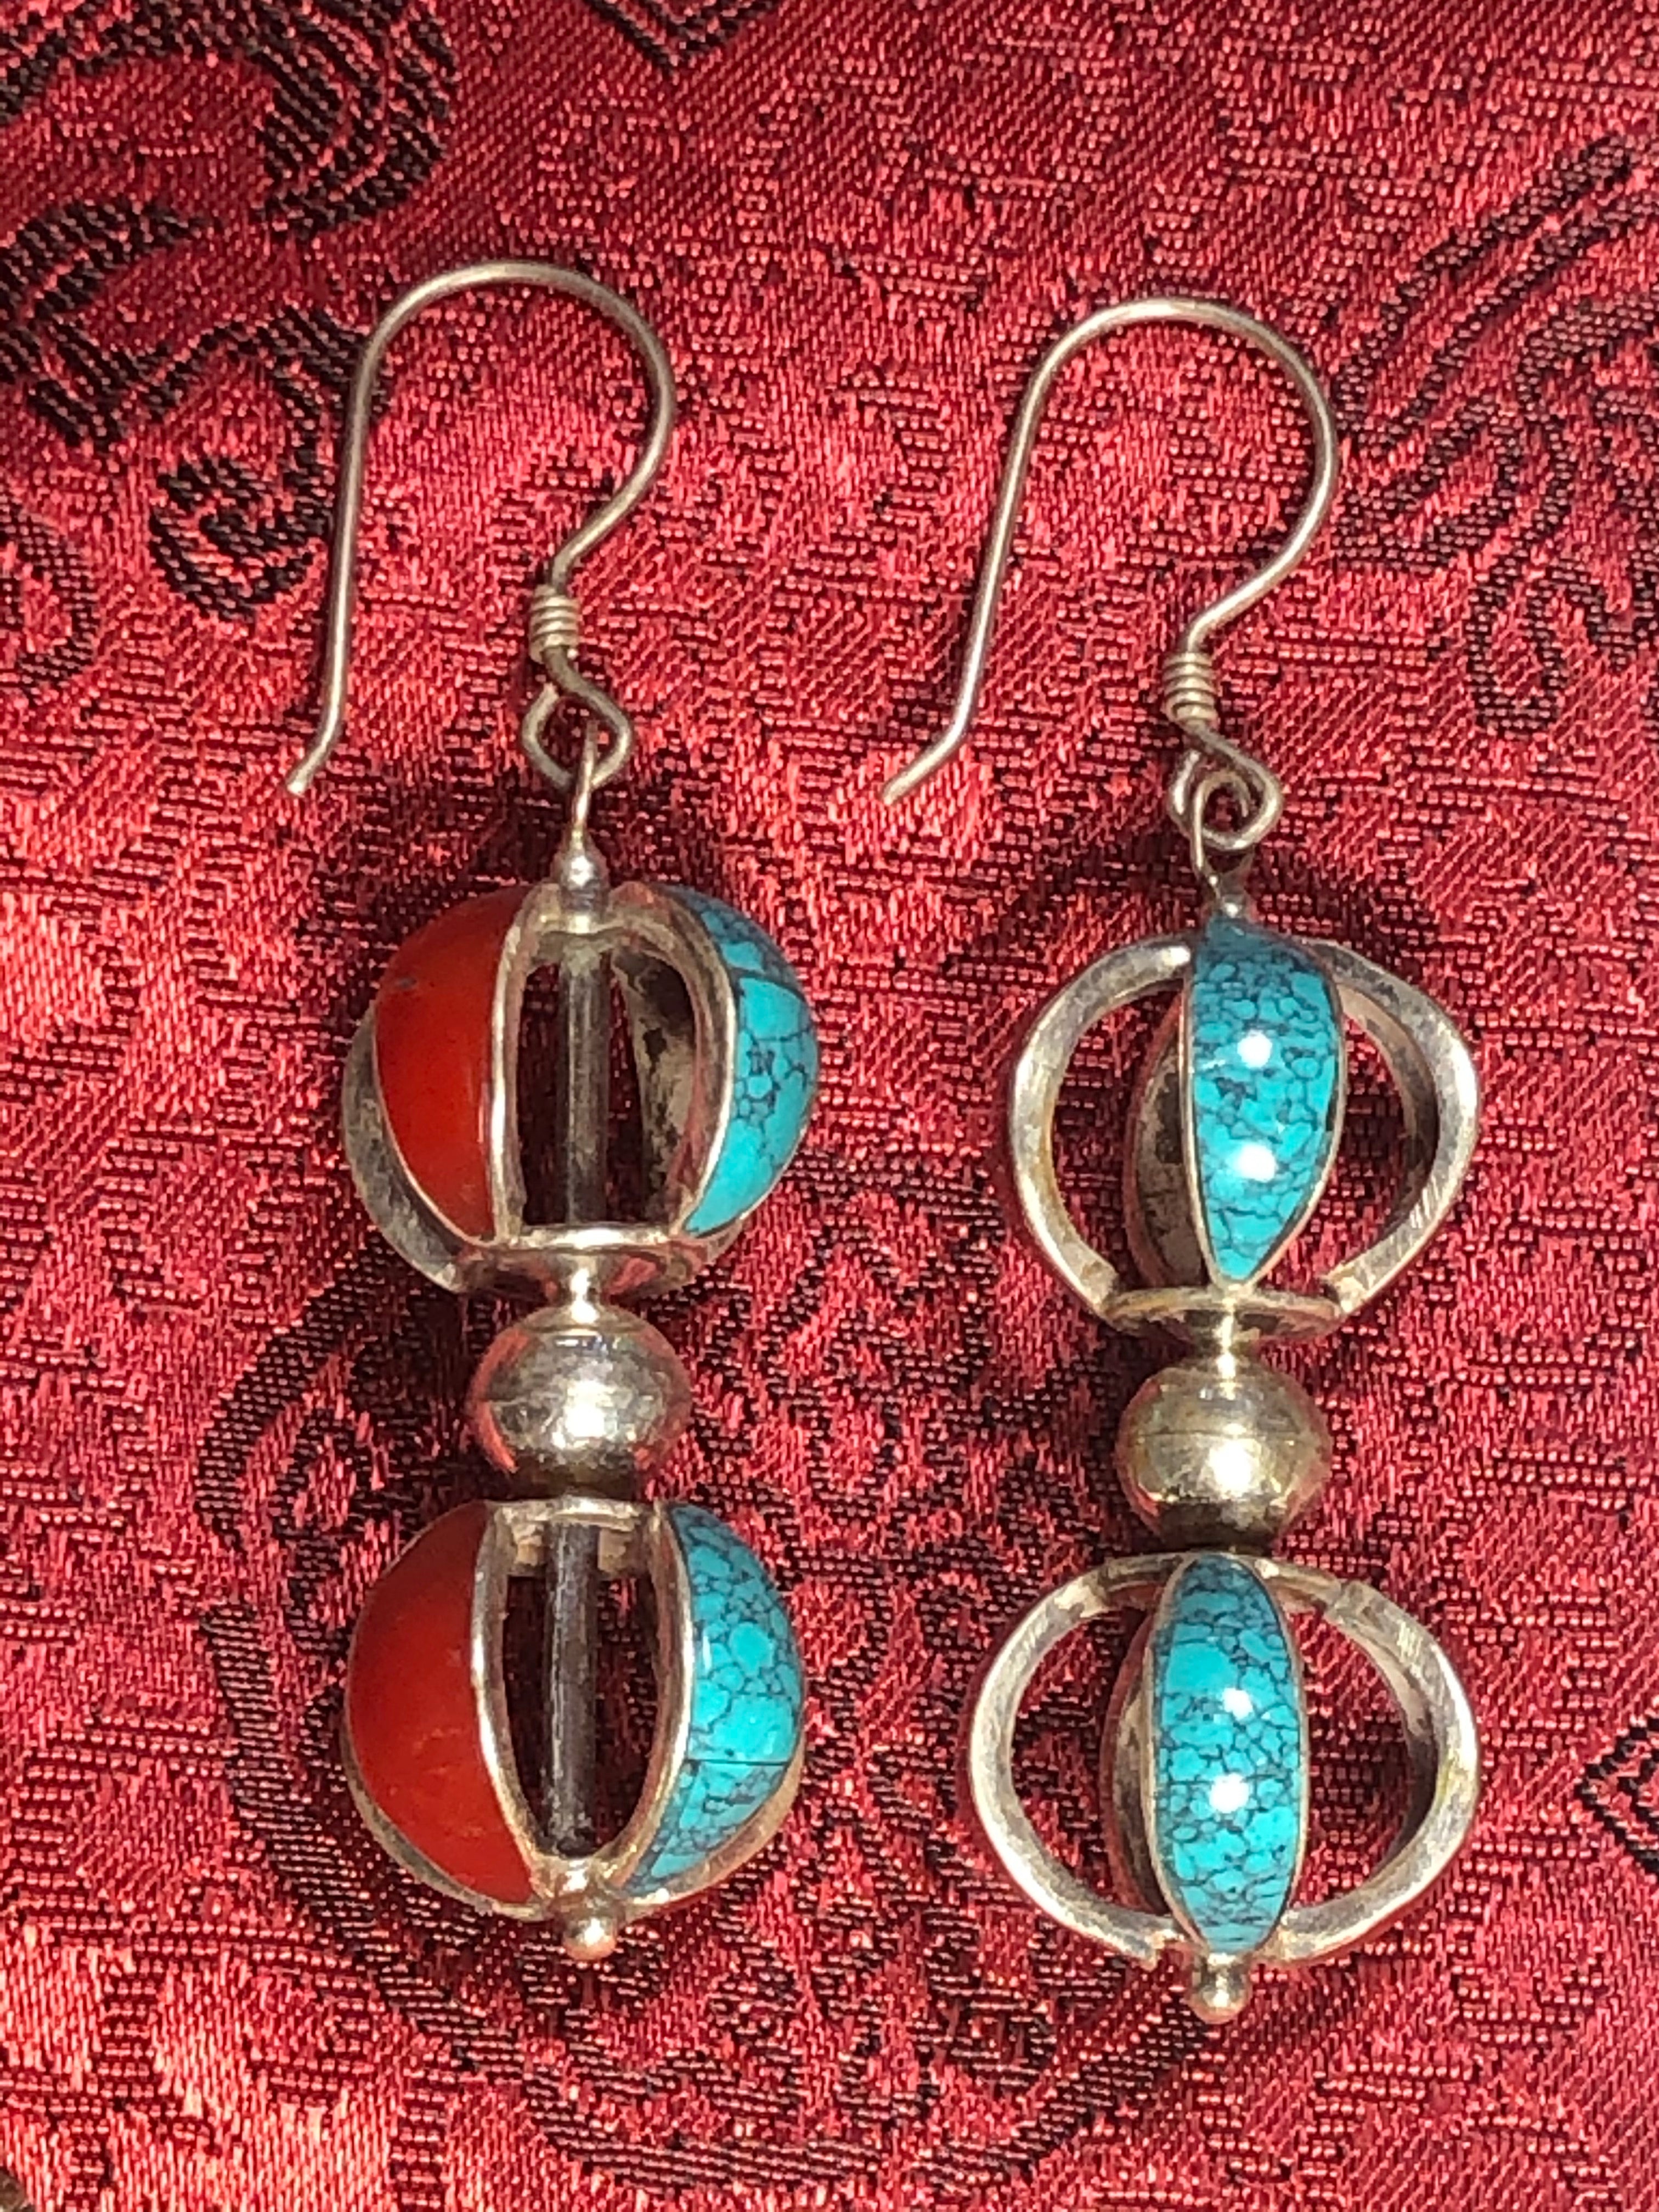 Coral Turquoise Silver Vajra/Dorje Earrings(TGSE 108)